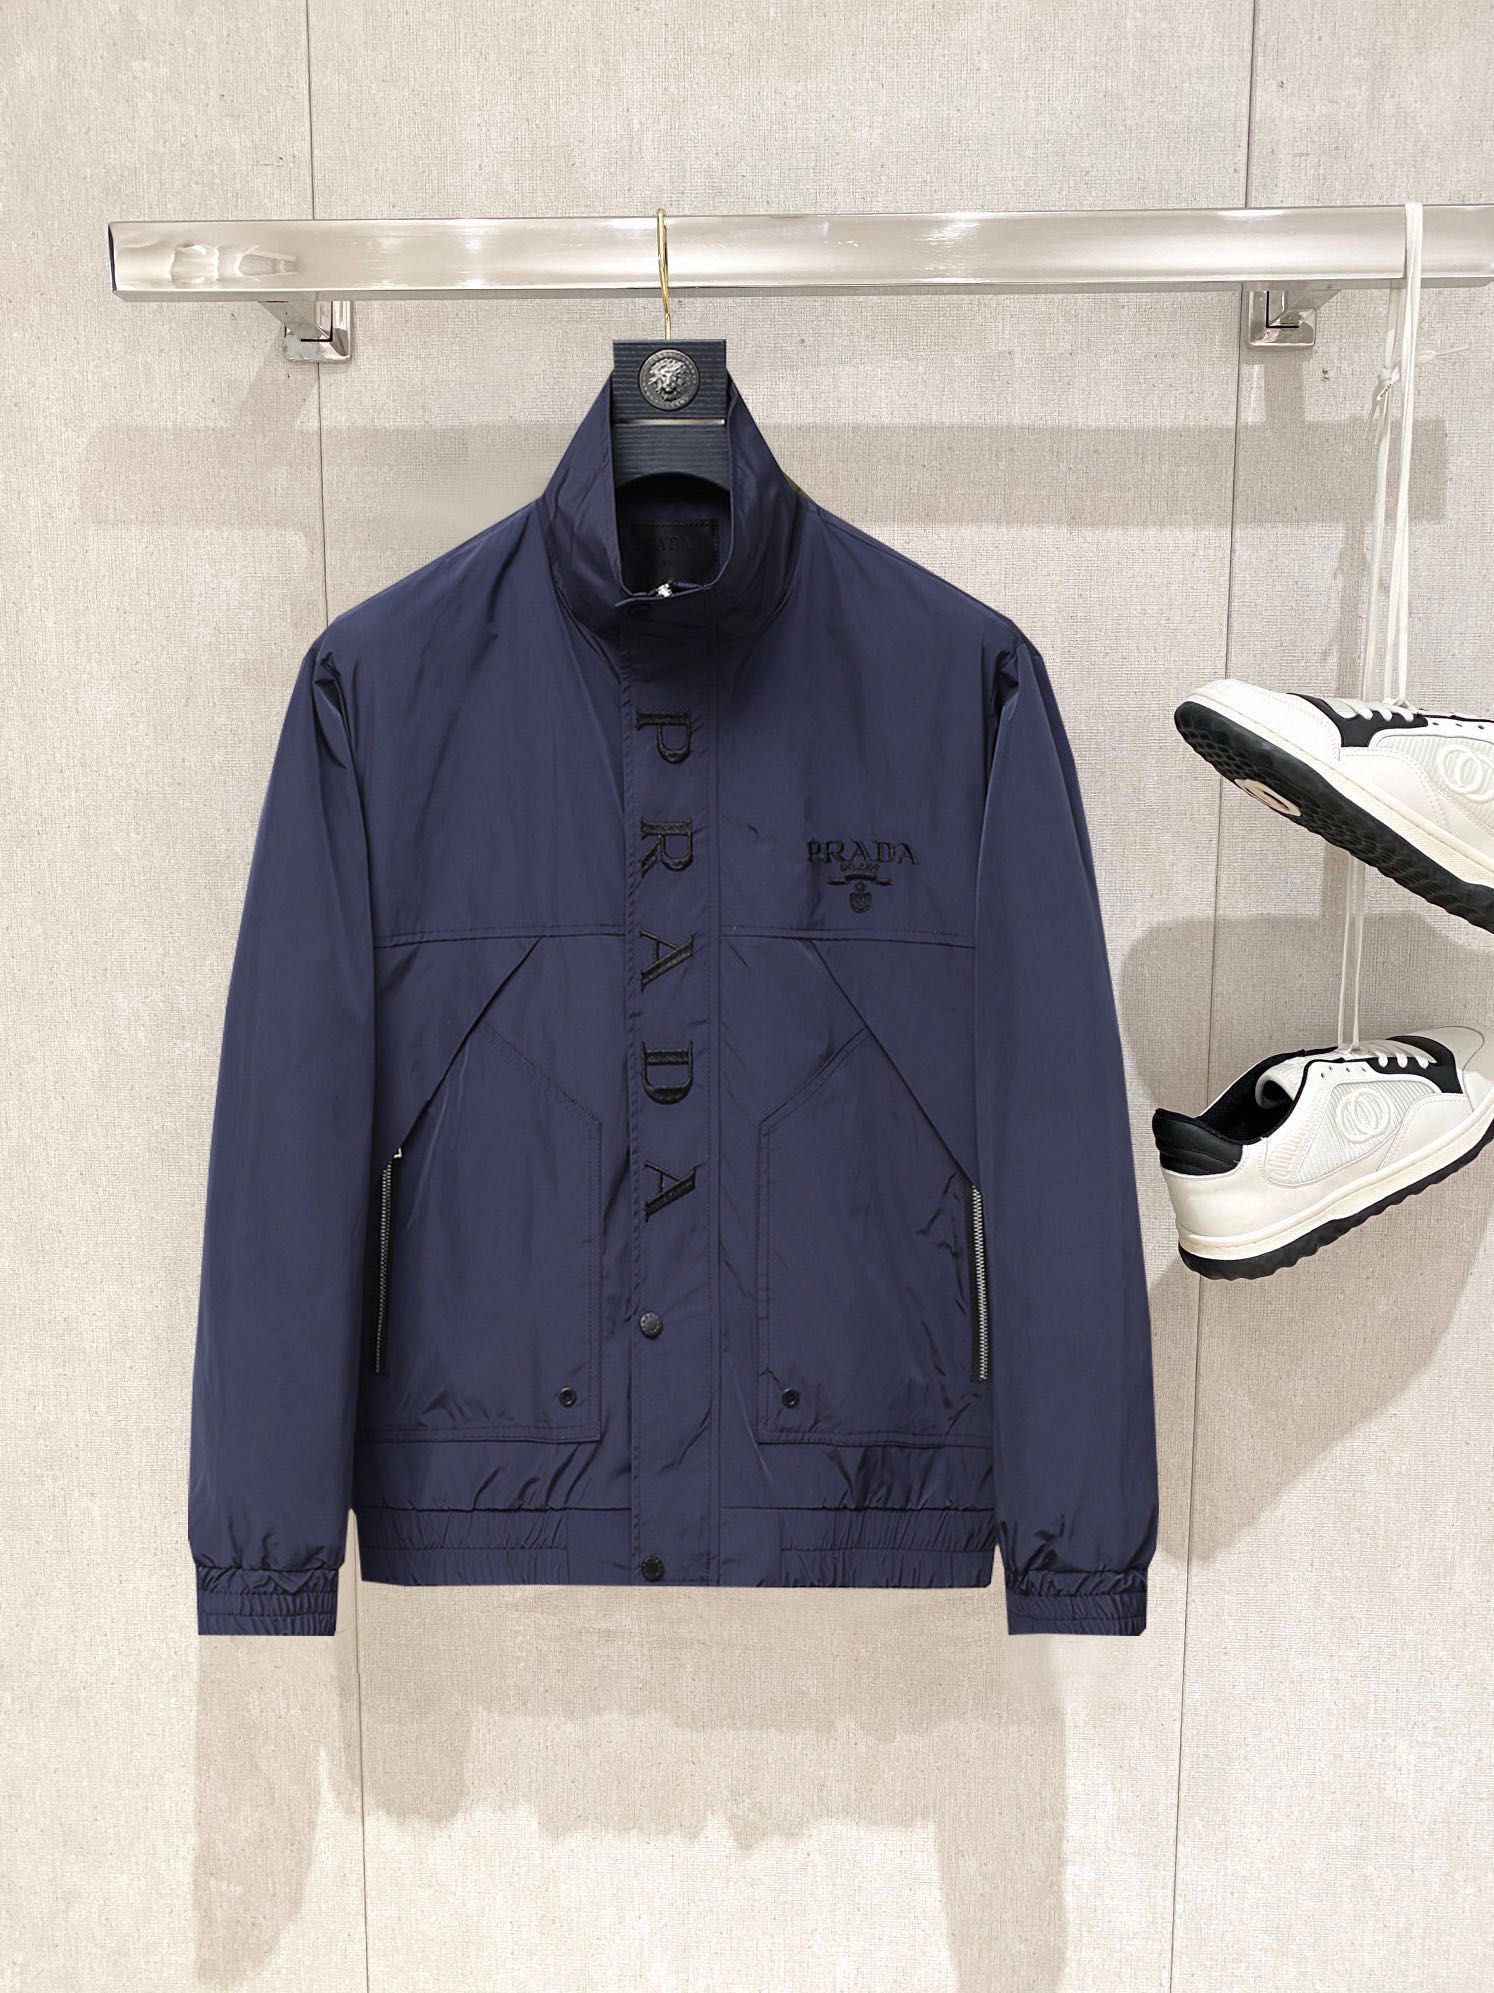 Prada Clothing Coats & Jackets Men Spring Collection Casual